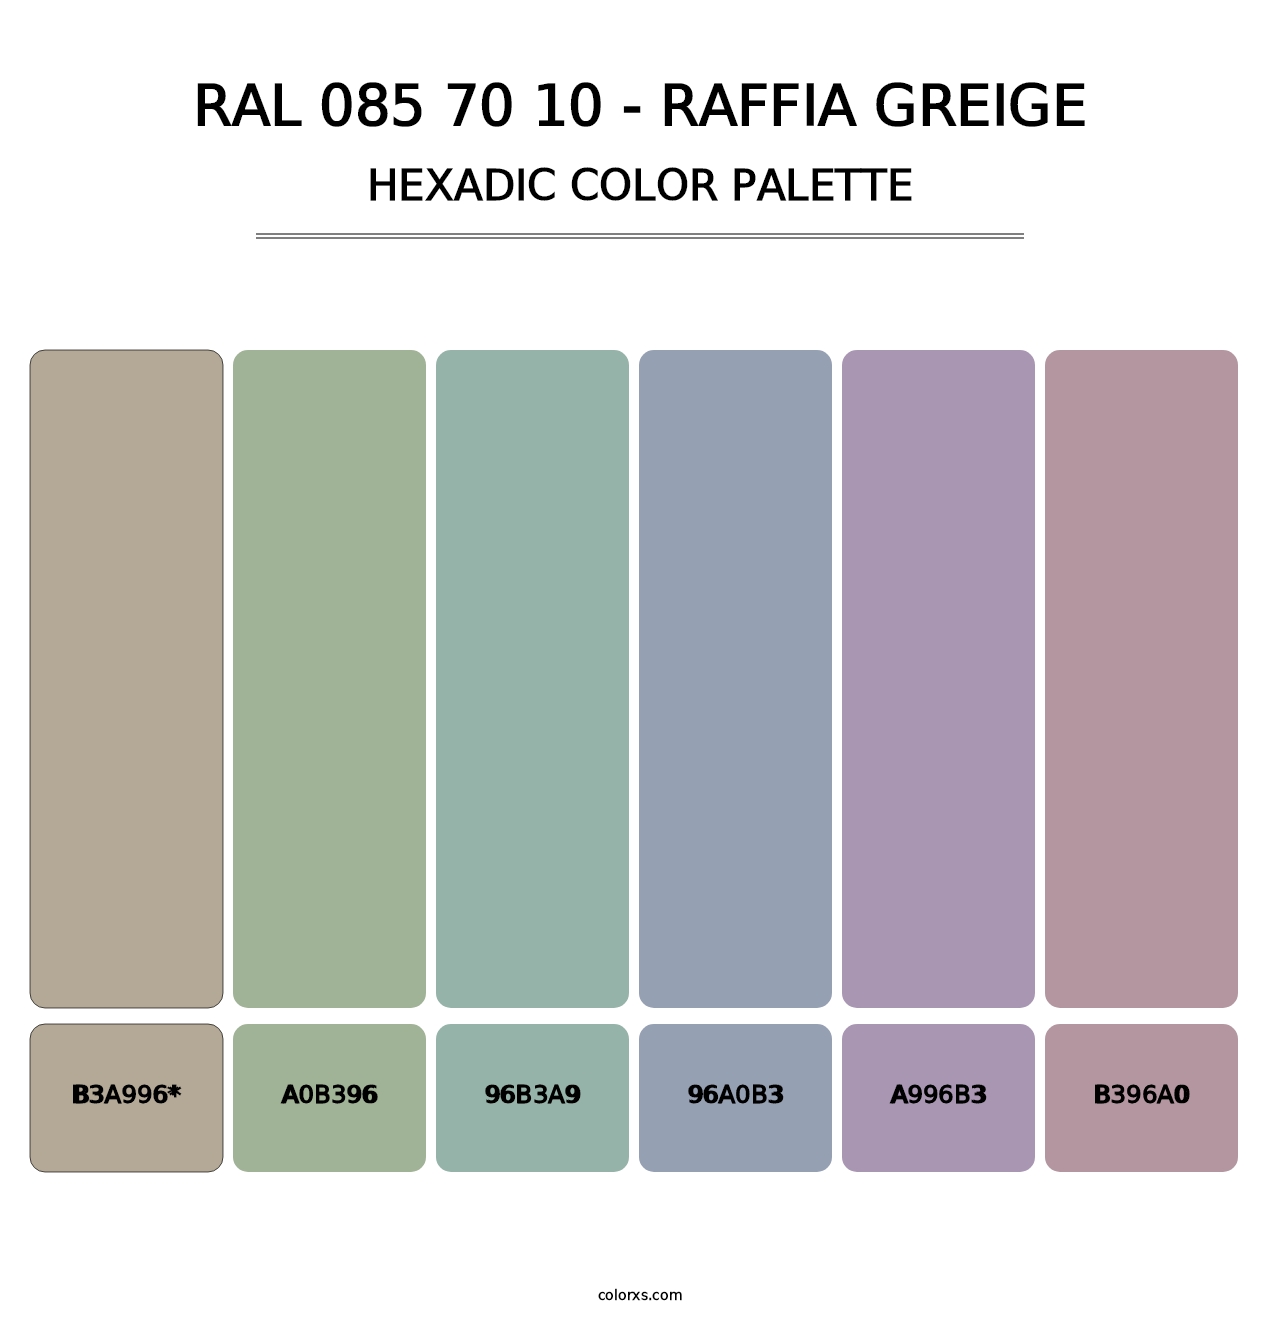 RAL 085 70 10 - Raffia Greige - Hexadic Color Palette